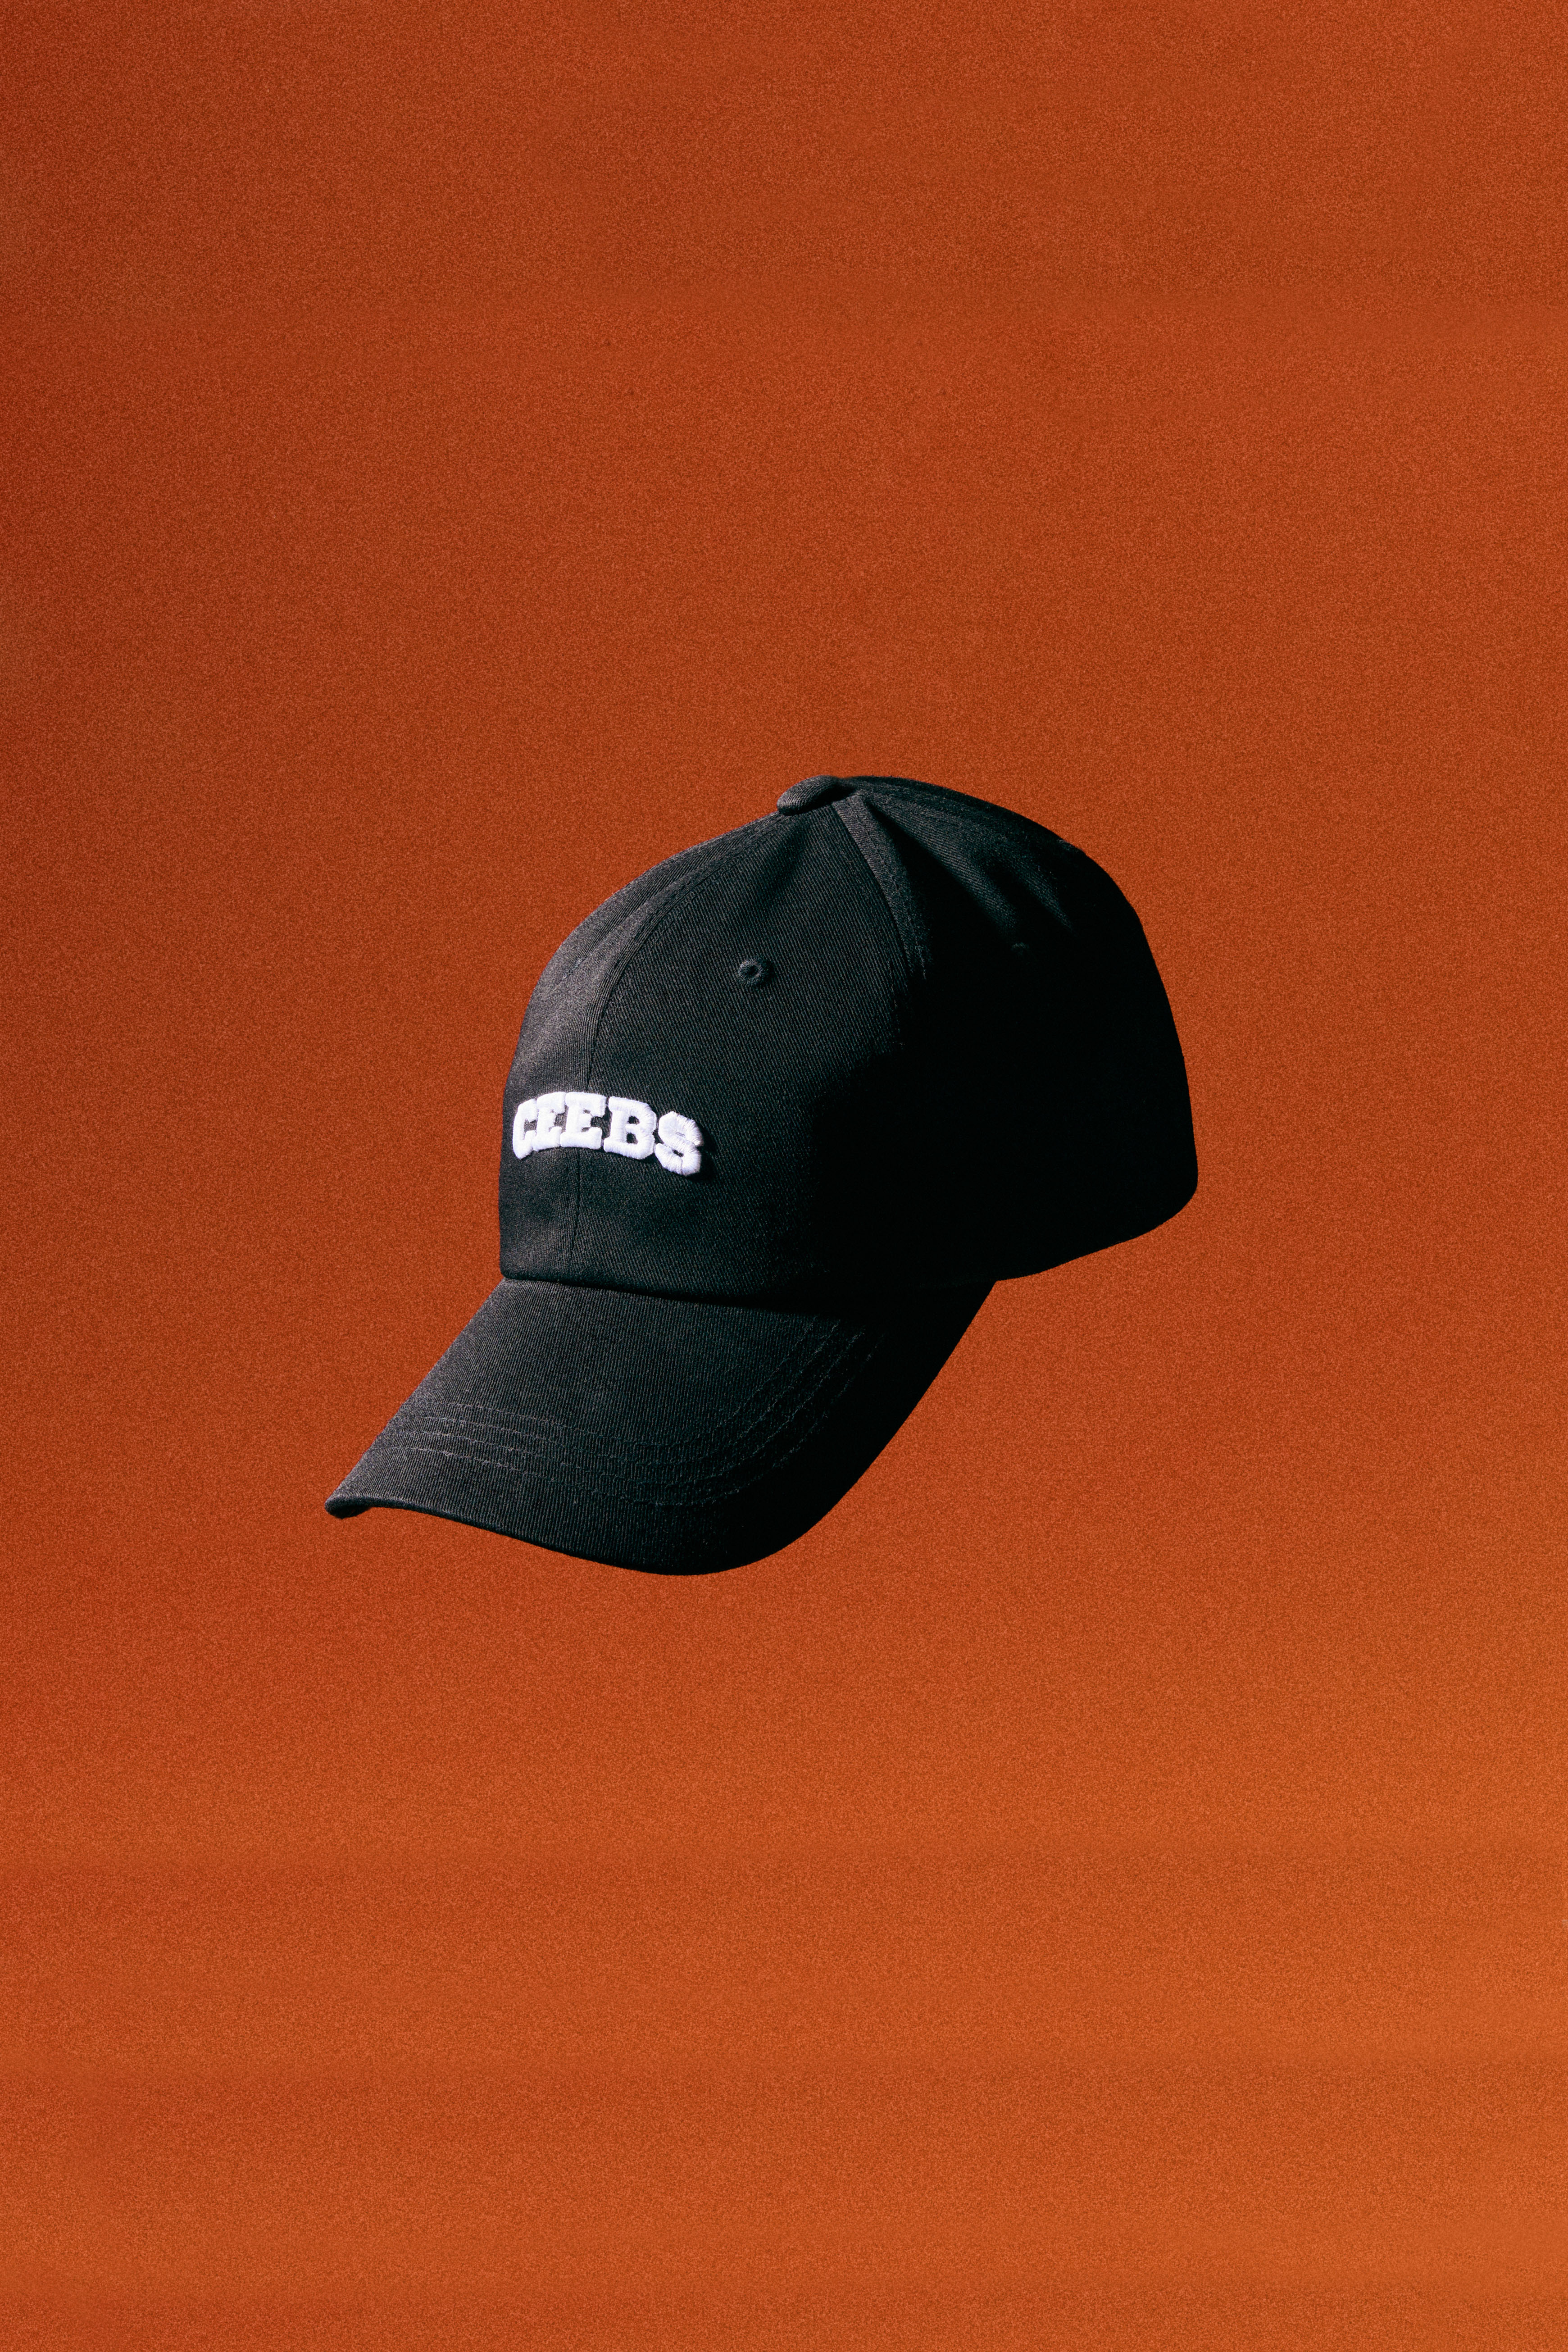 CEEBS 001 Logo Cap (Black)